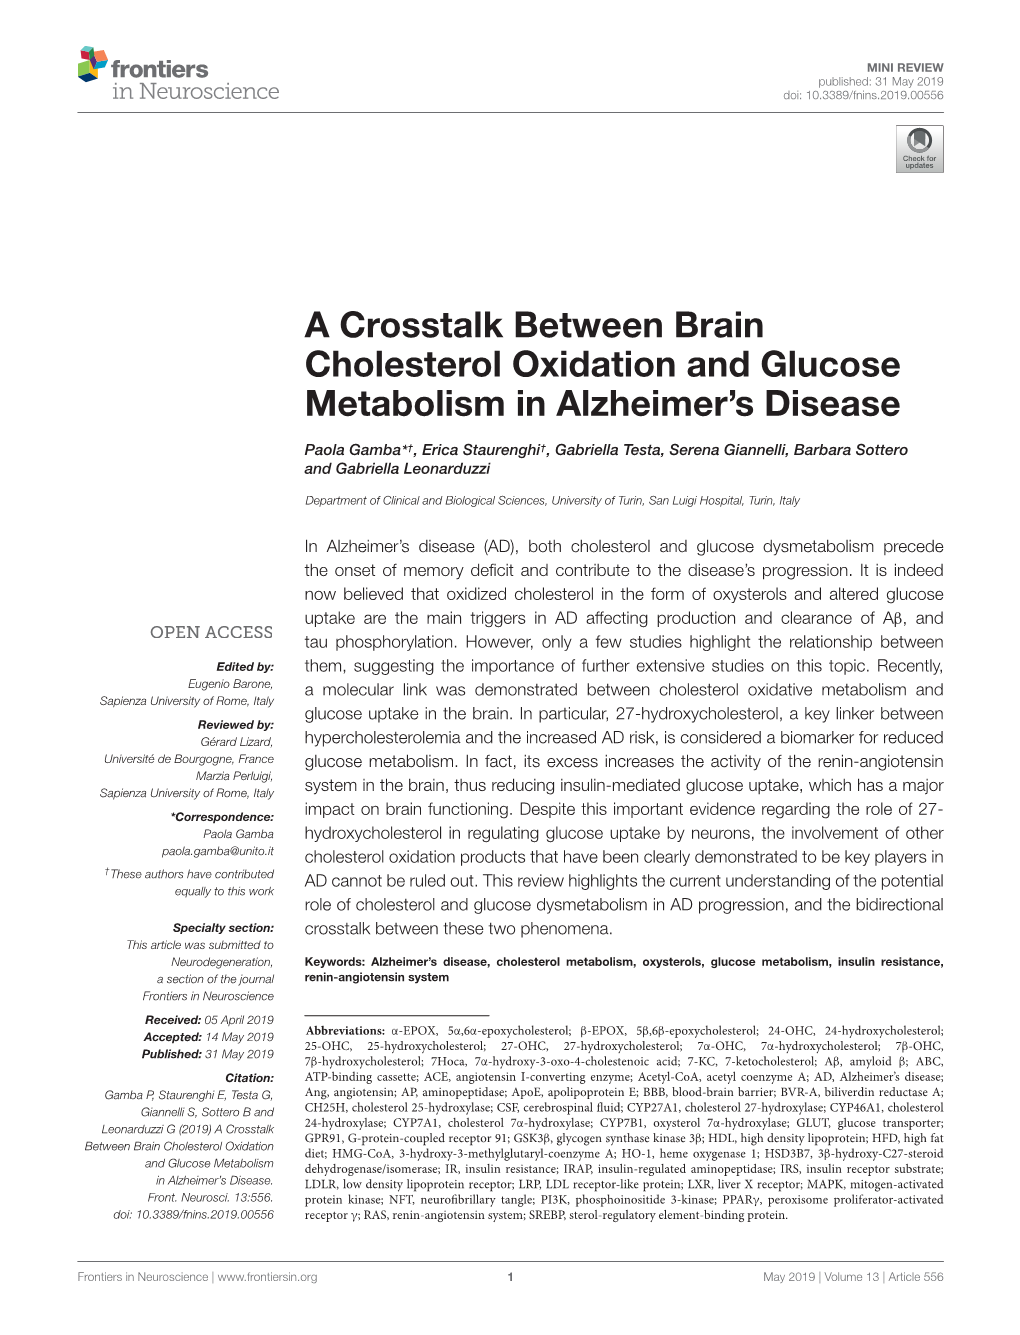 A Crosstalk Between Brain Cholesterol Oxidation and Glucose Metabolism in Alzheimer’S Disease